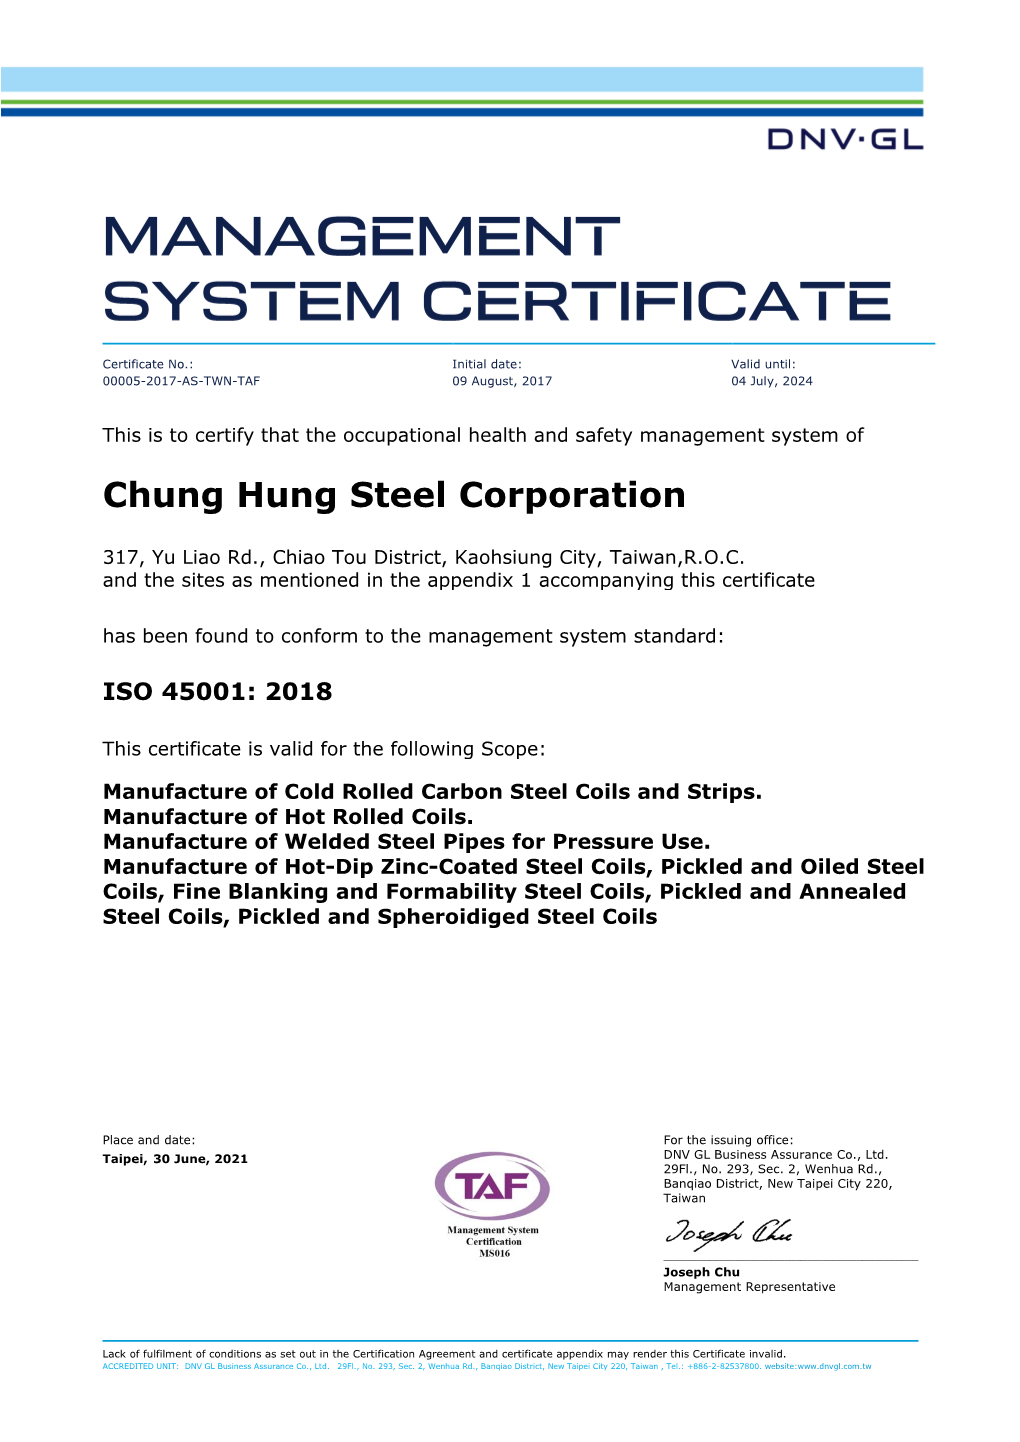 Chung Hung Steel Corporation